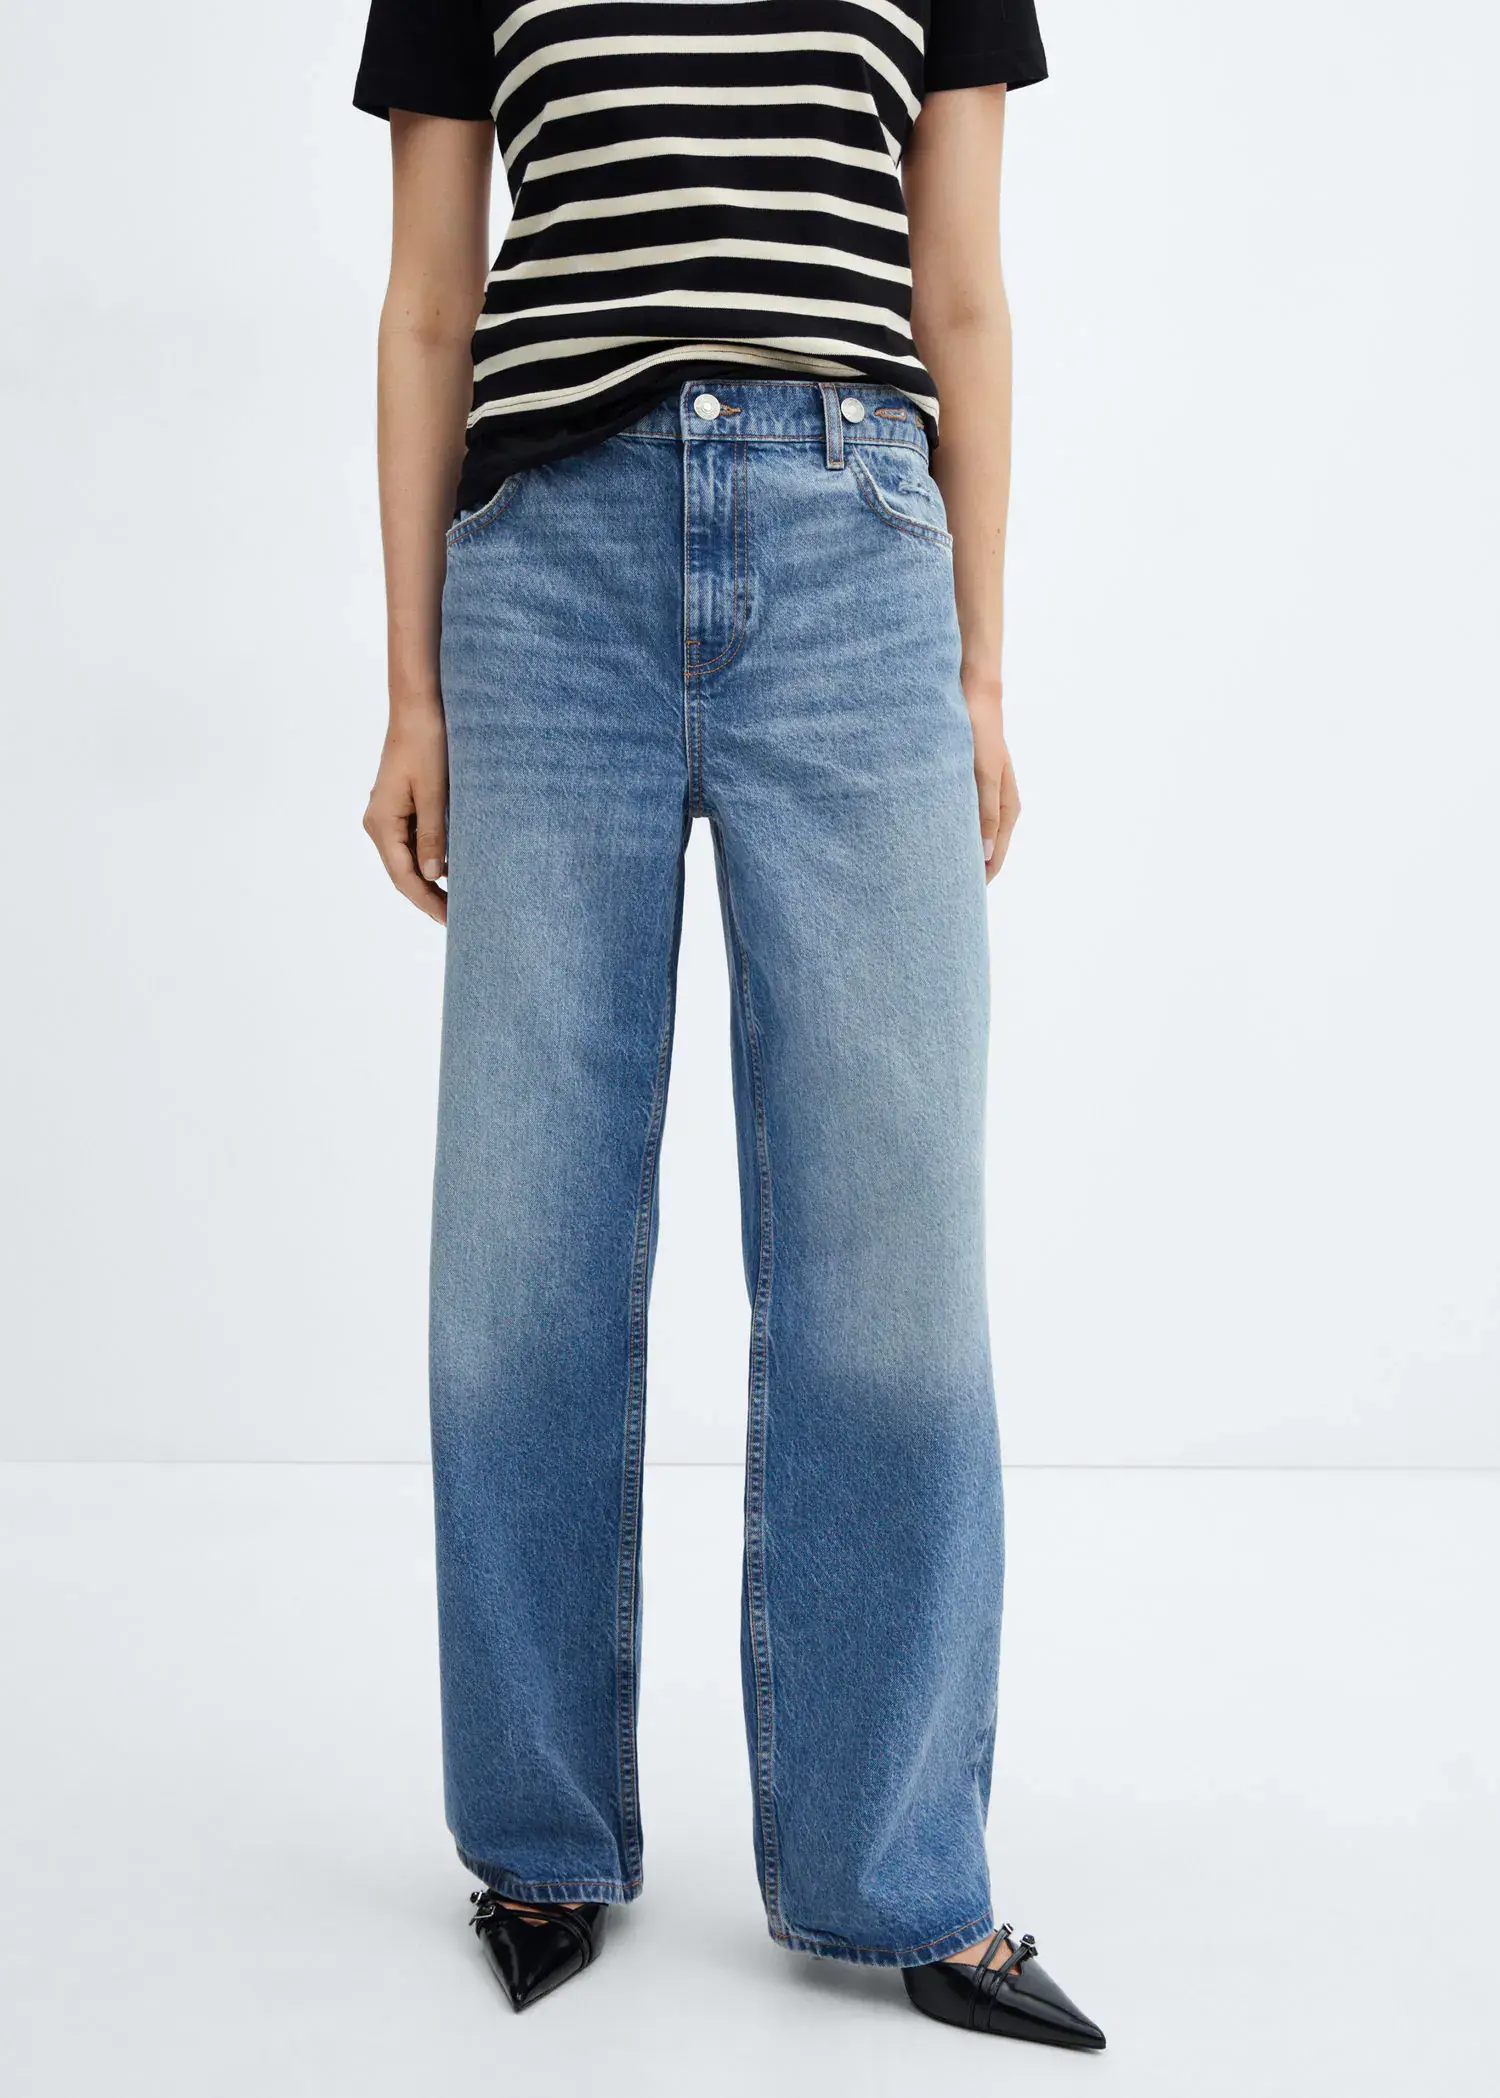 Mango Loose-Wideleg-Jeans mit mittlerer Bundhöhe. 2